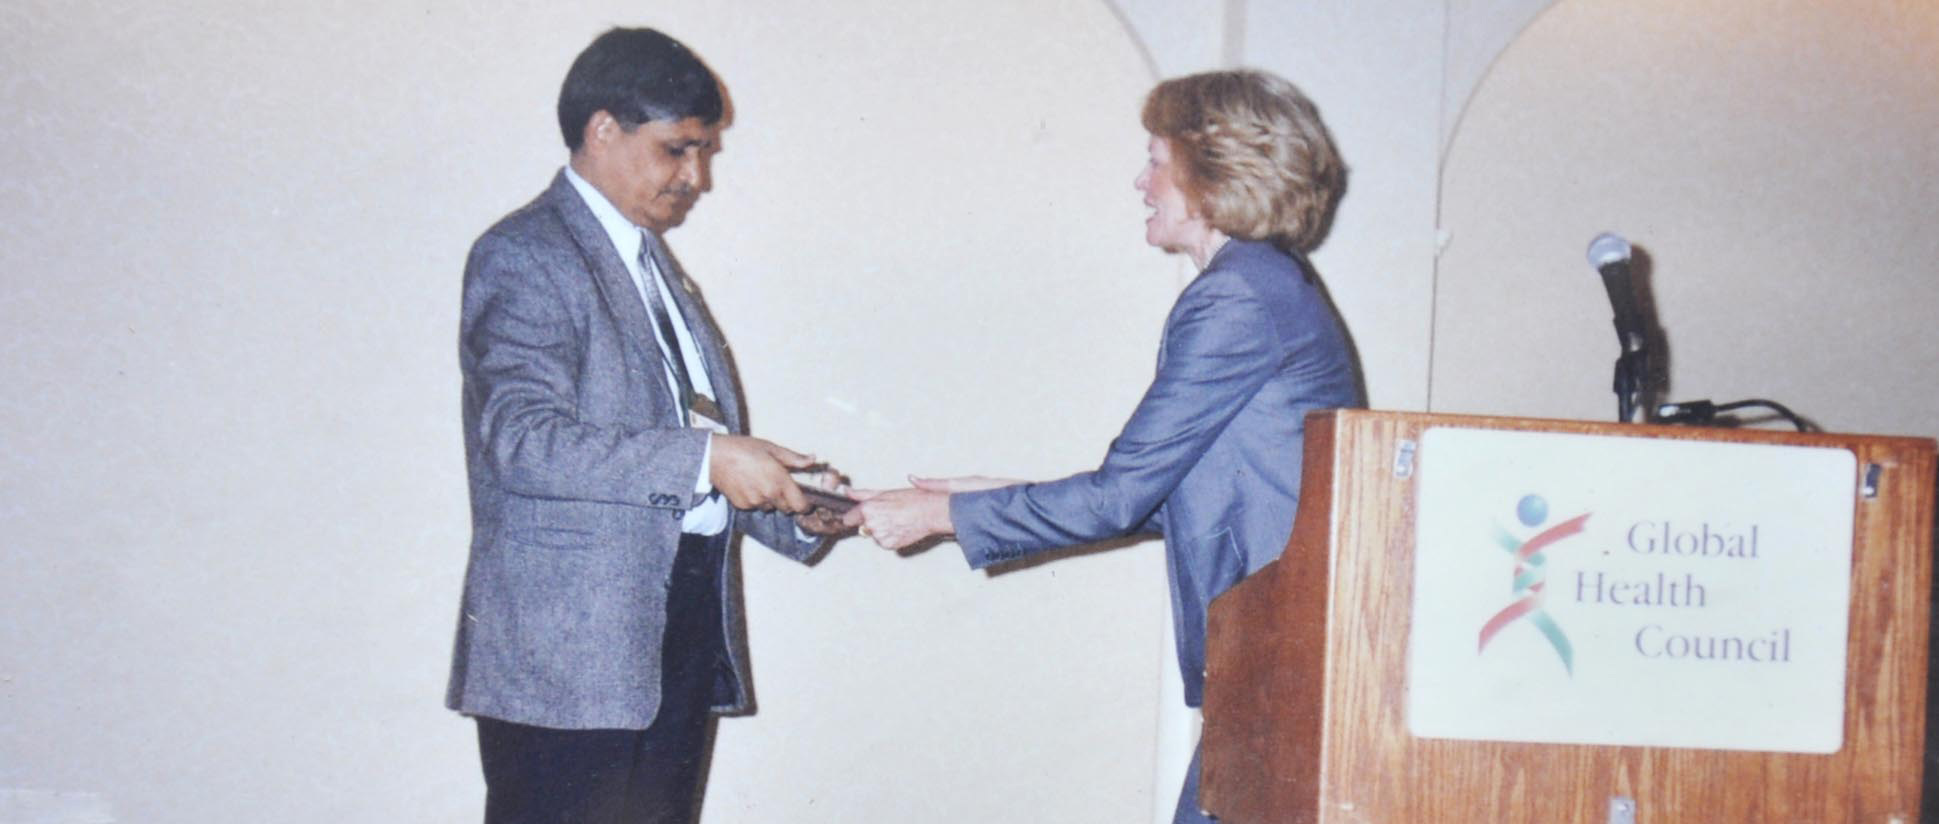 Dr BS Garg awarded Safe Motherhood Award in 1995 at Washington